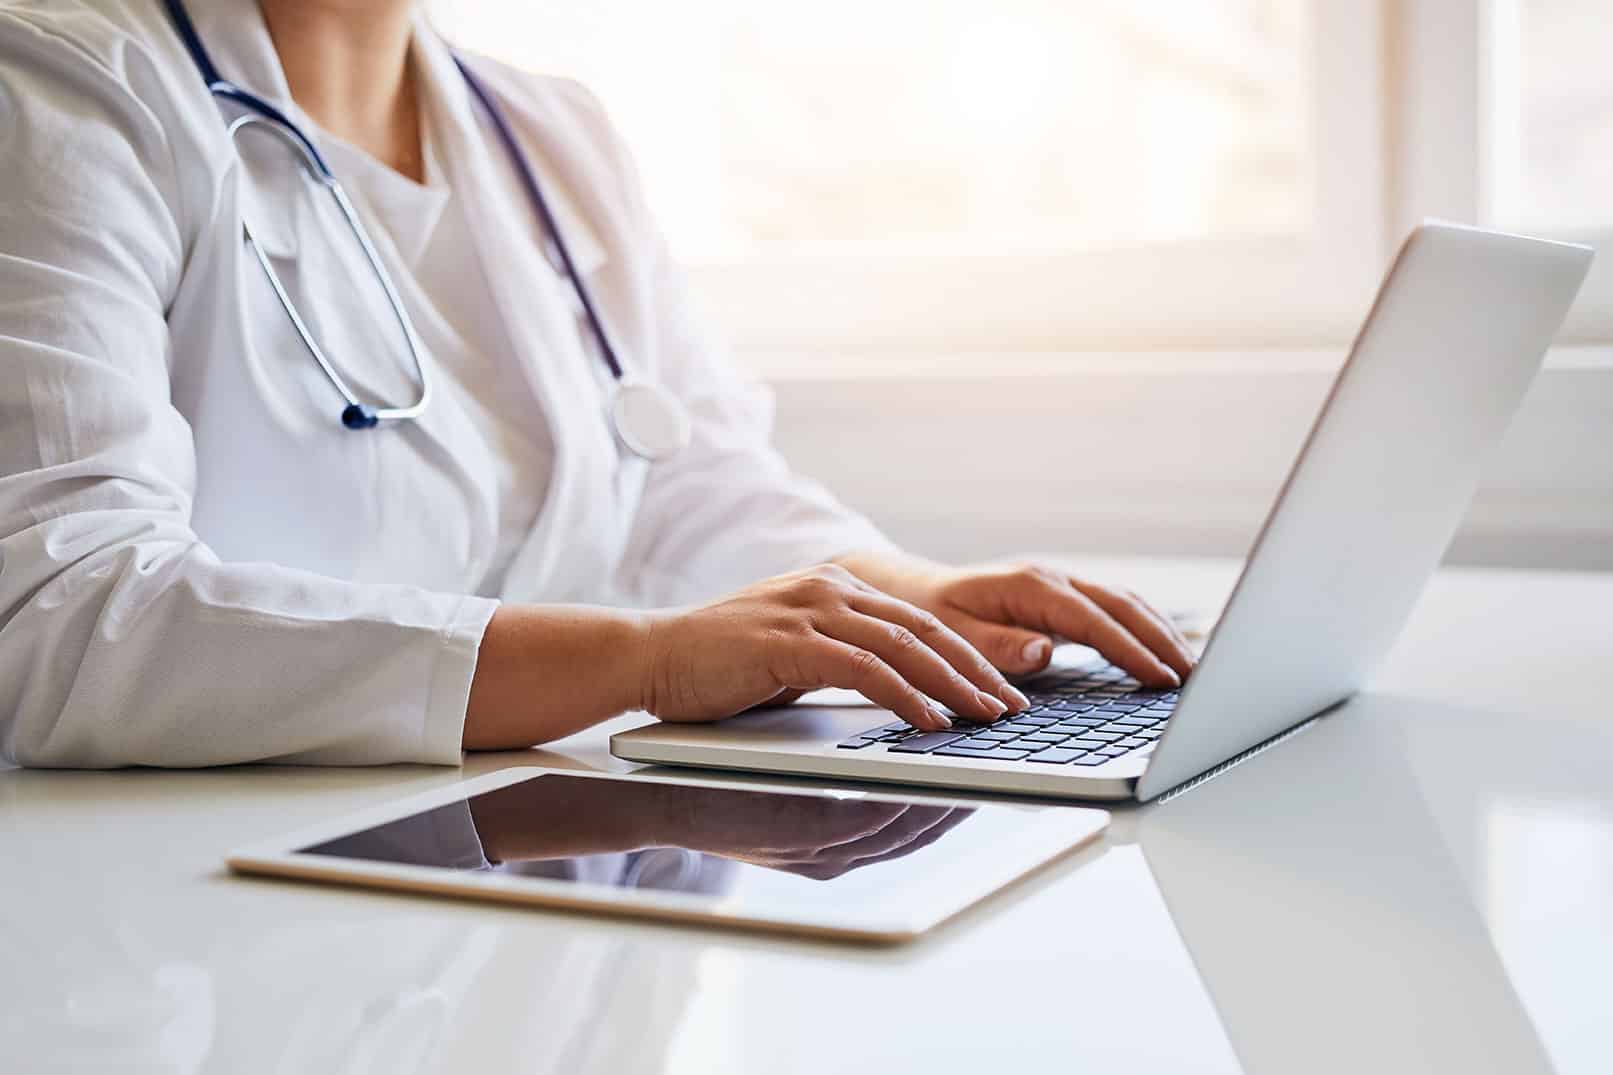 Medical professional using laptop